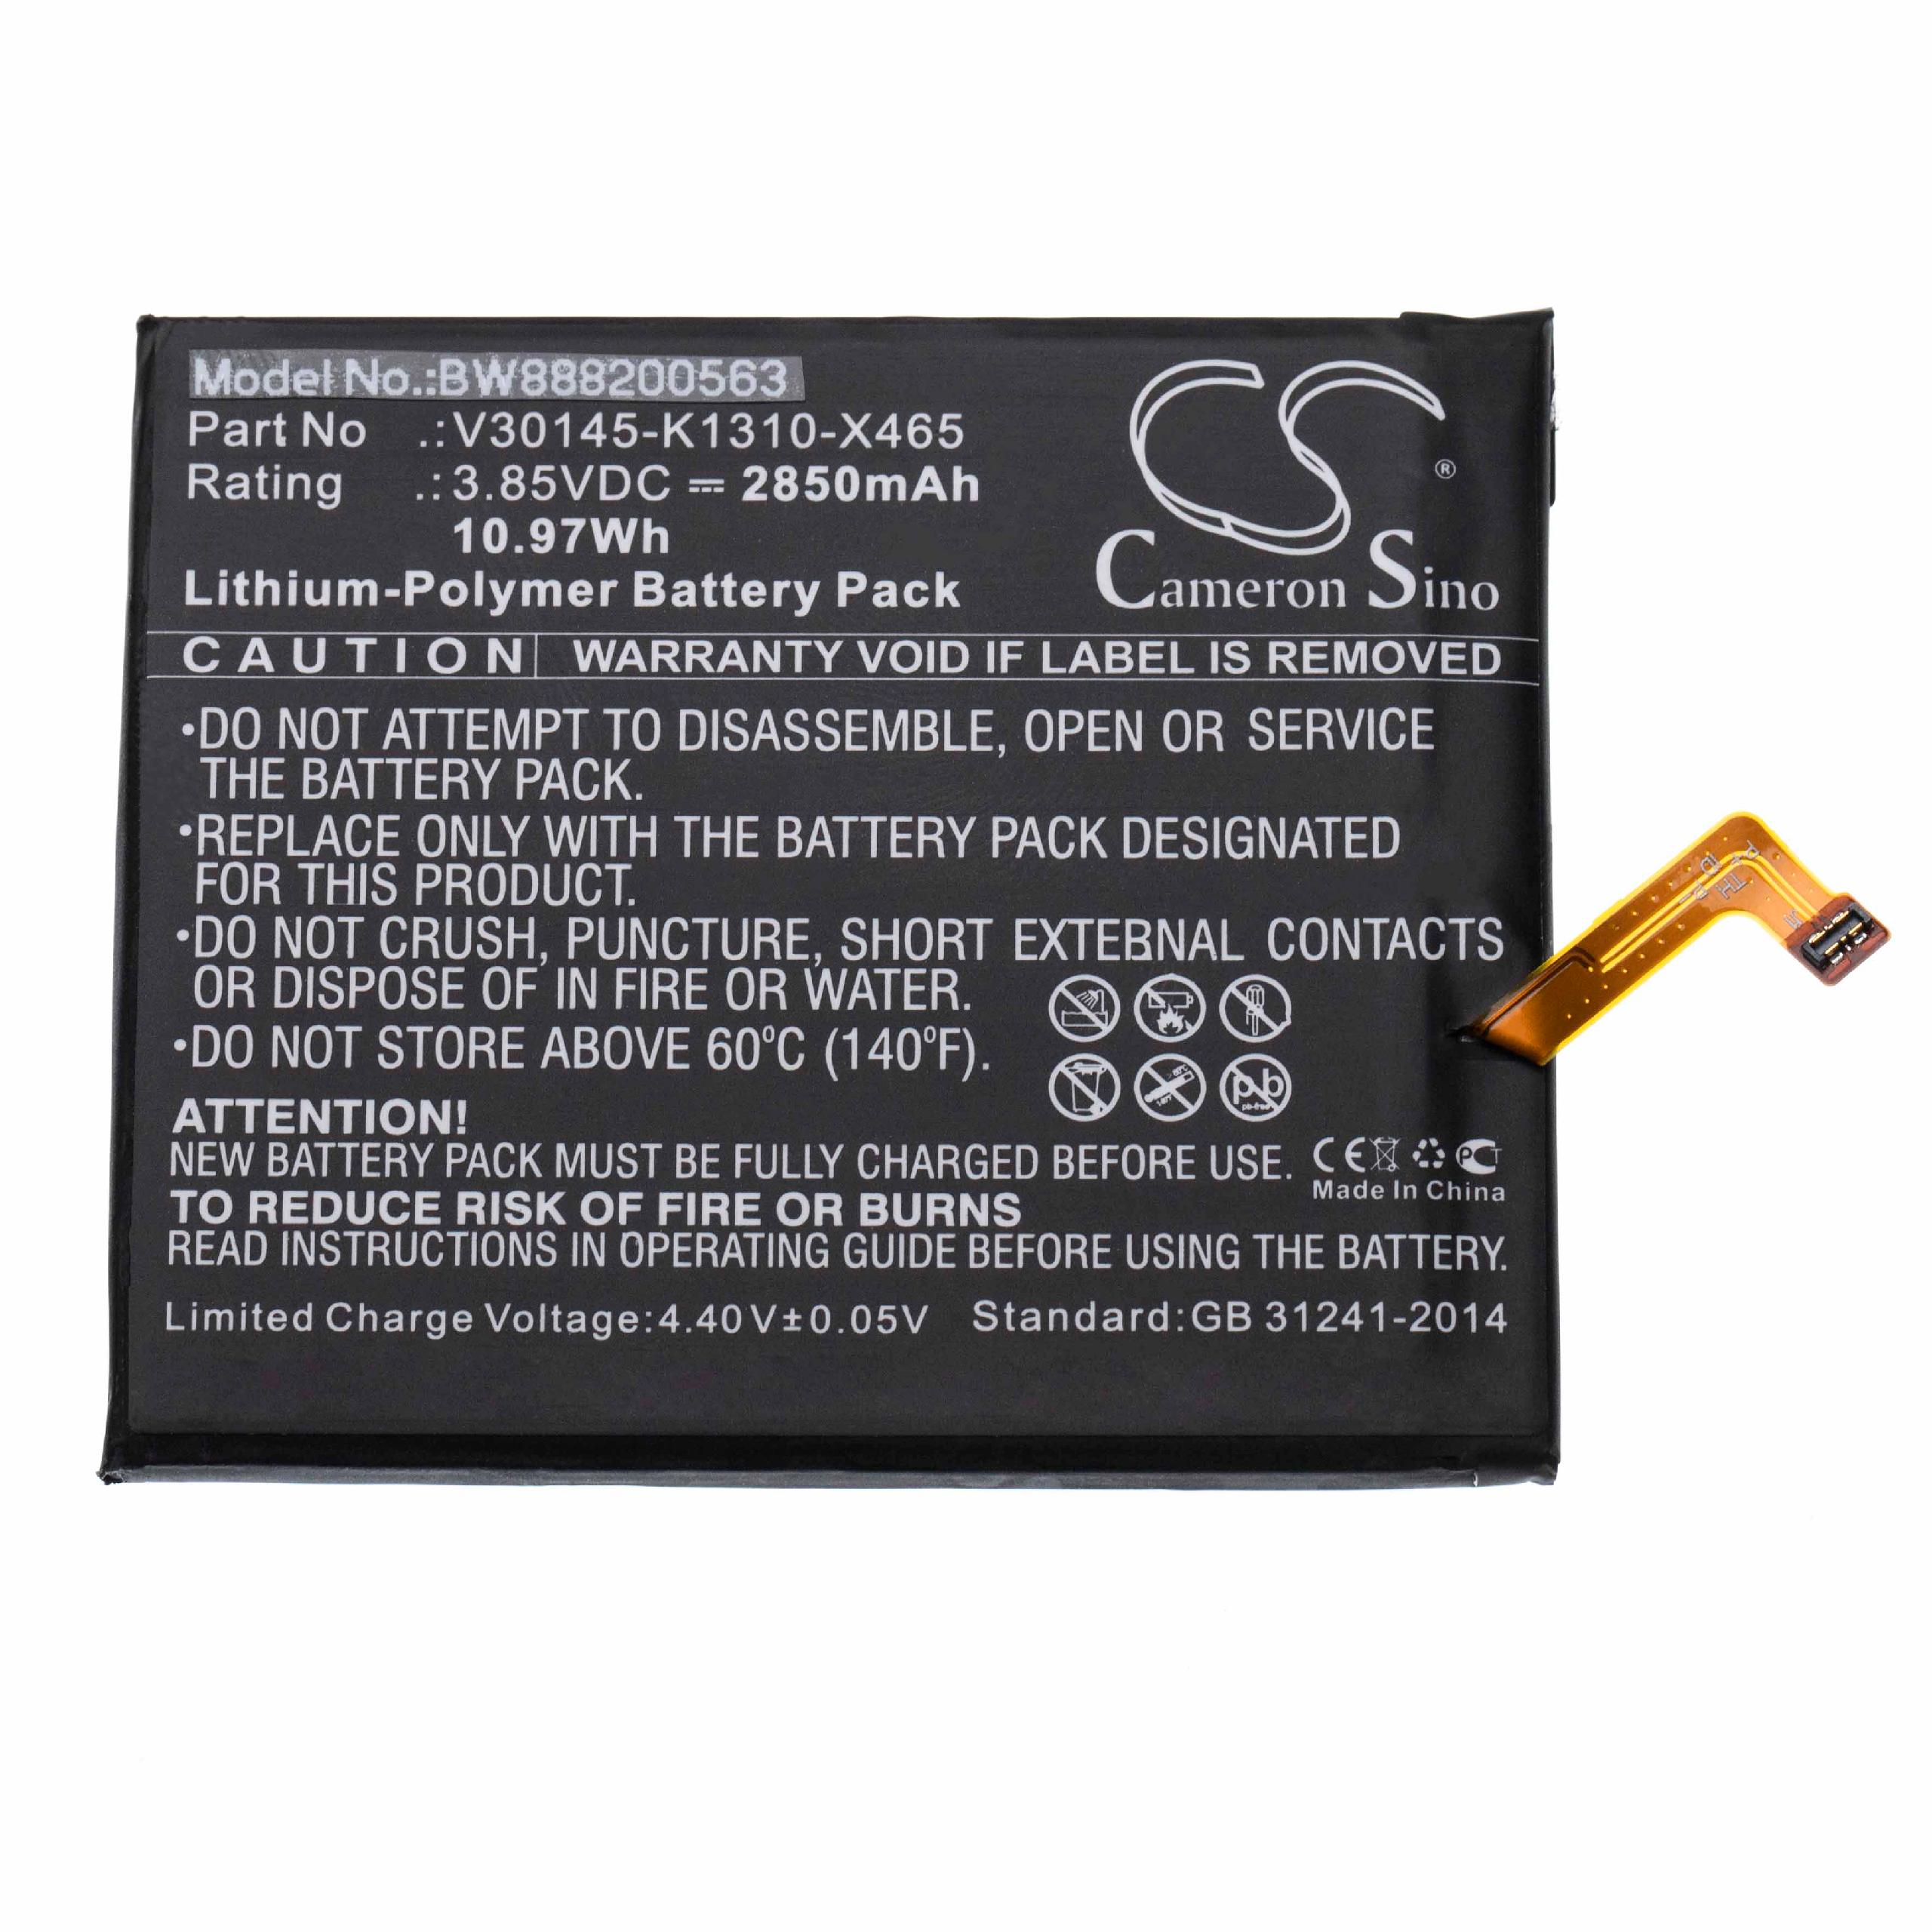 Batteria sostituisce Gigaset V30145-K1310-X465 per cellulare Gigaset - 2850mAh 3,85V Li-Poly